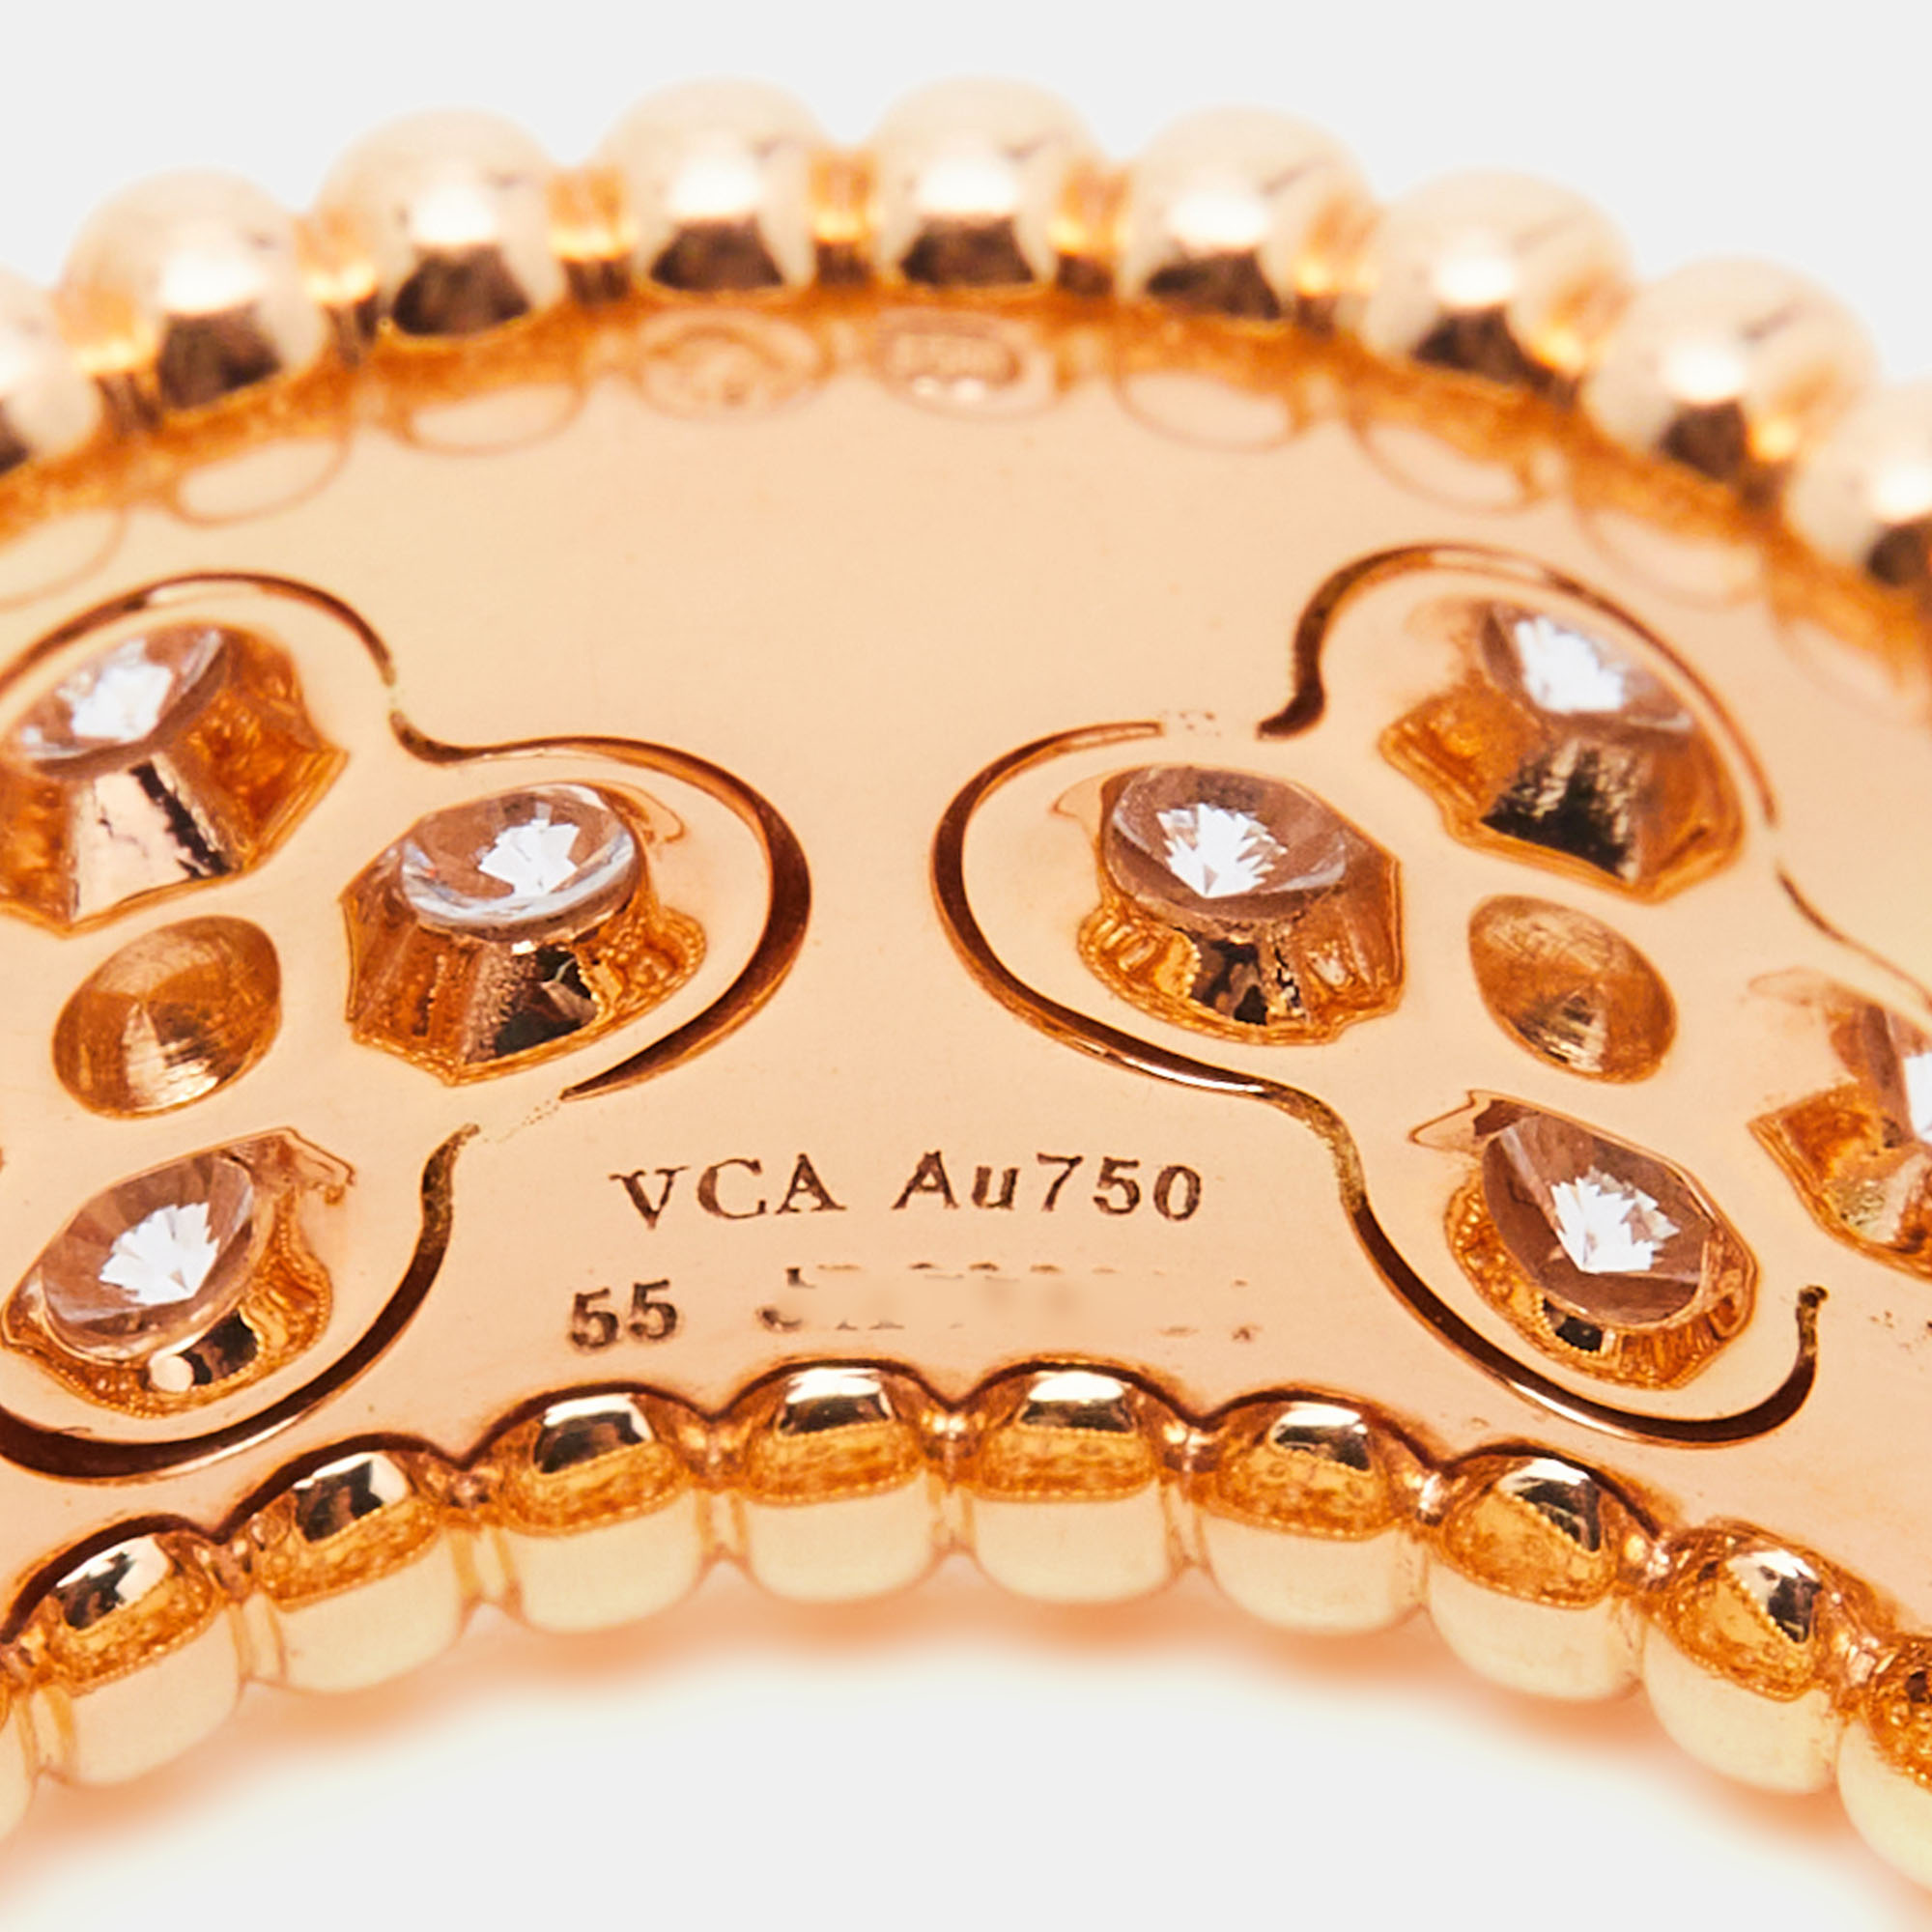 Van Cleef & Arpels Perlée Clover Diamonds 18k Rose Gold Ring Size 55